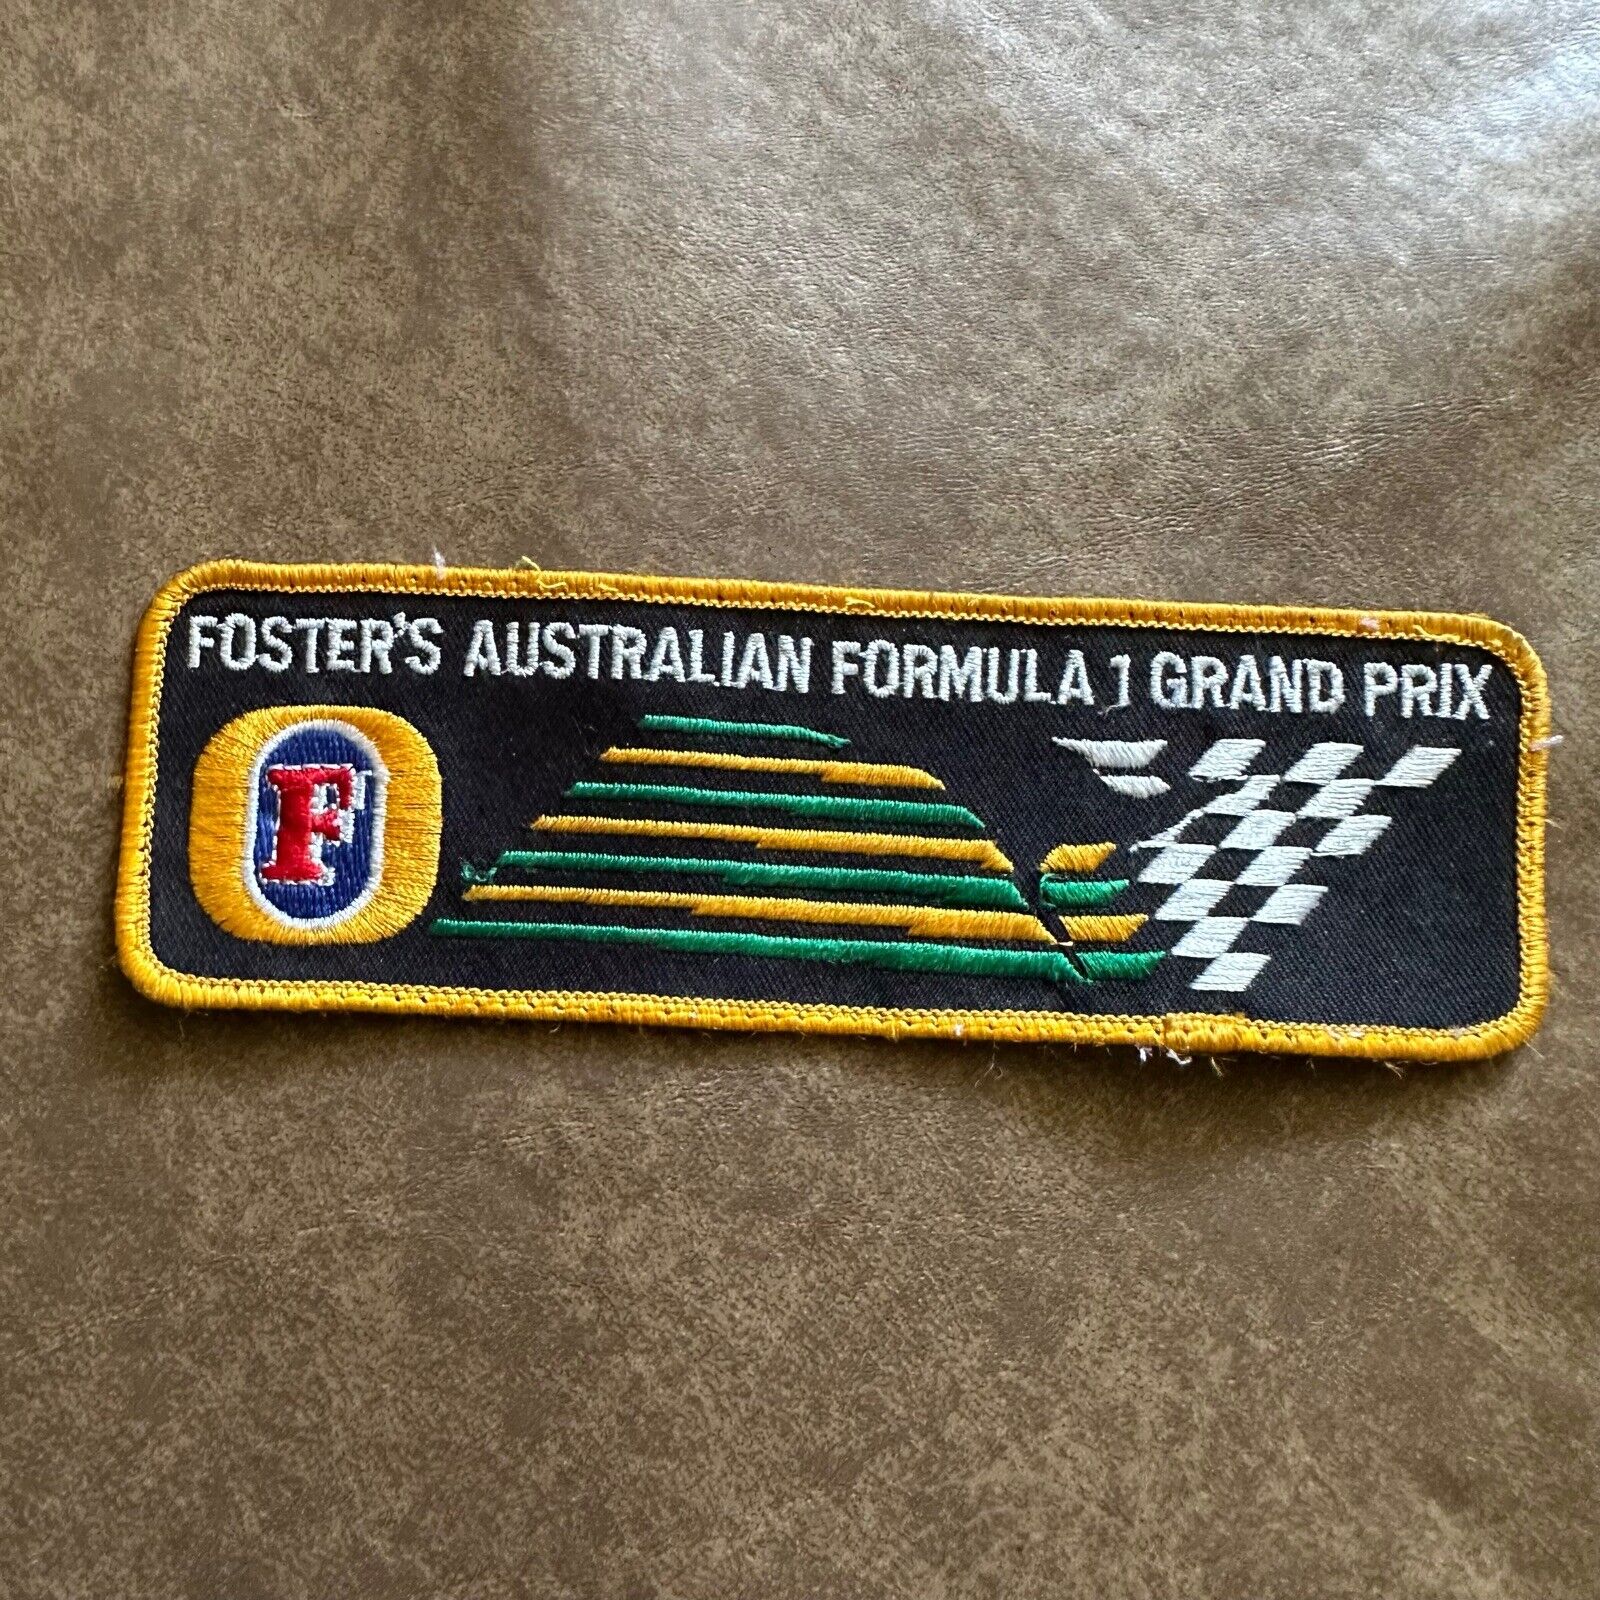 VINTAGE ADELAIDE FOSTER'S AUSTRALIAN FORMULA 1 GRAND PRIX SEW ON PATCH